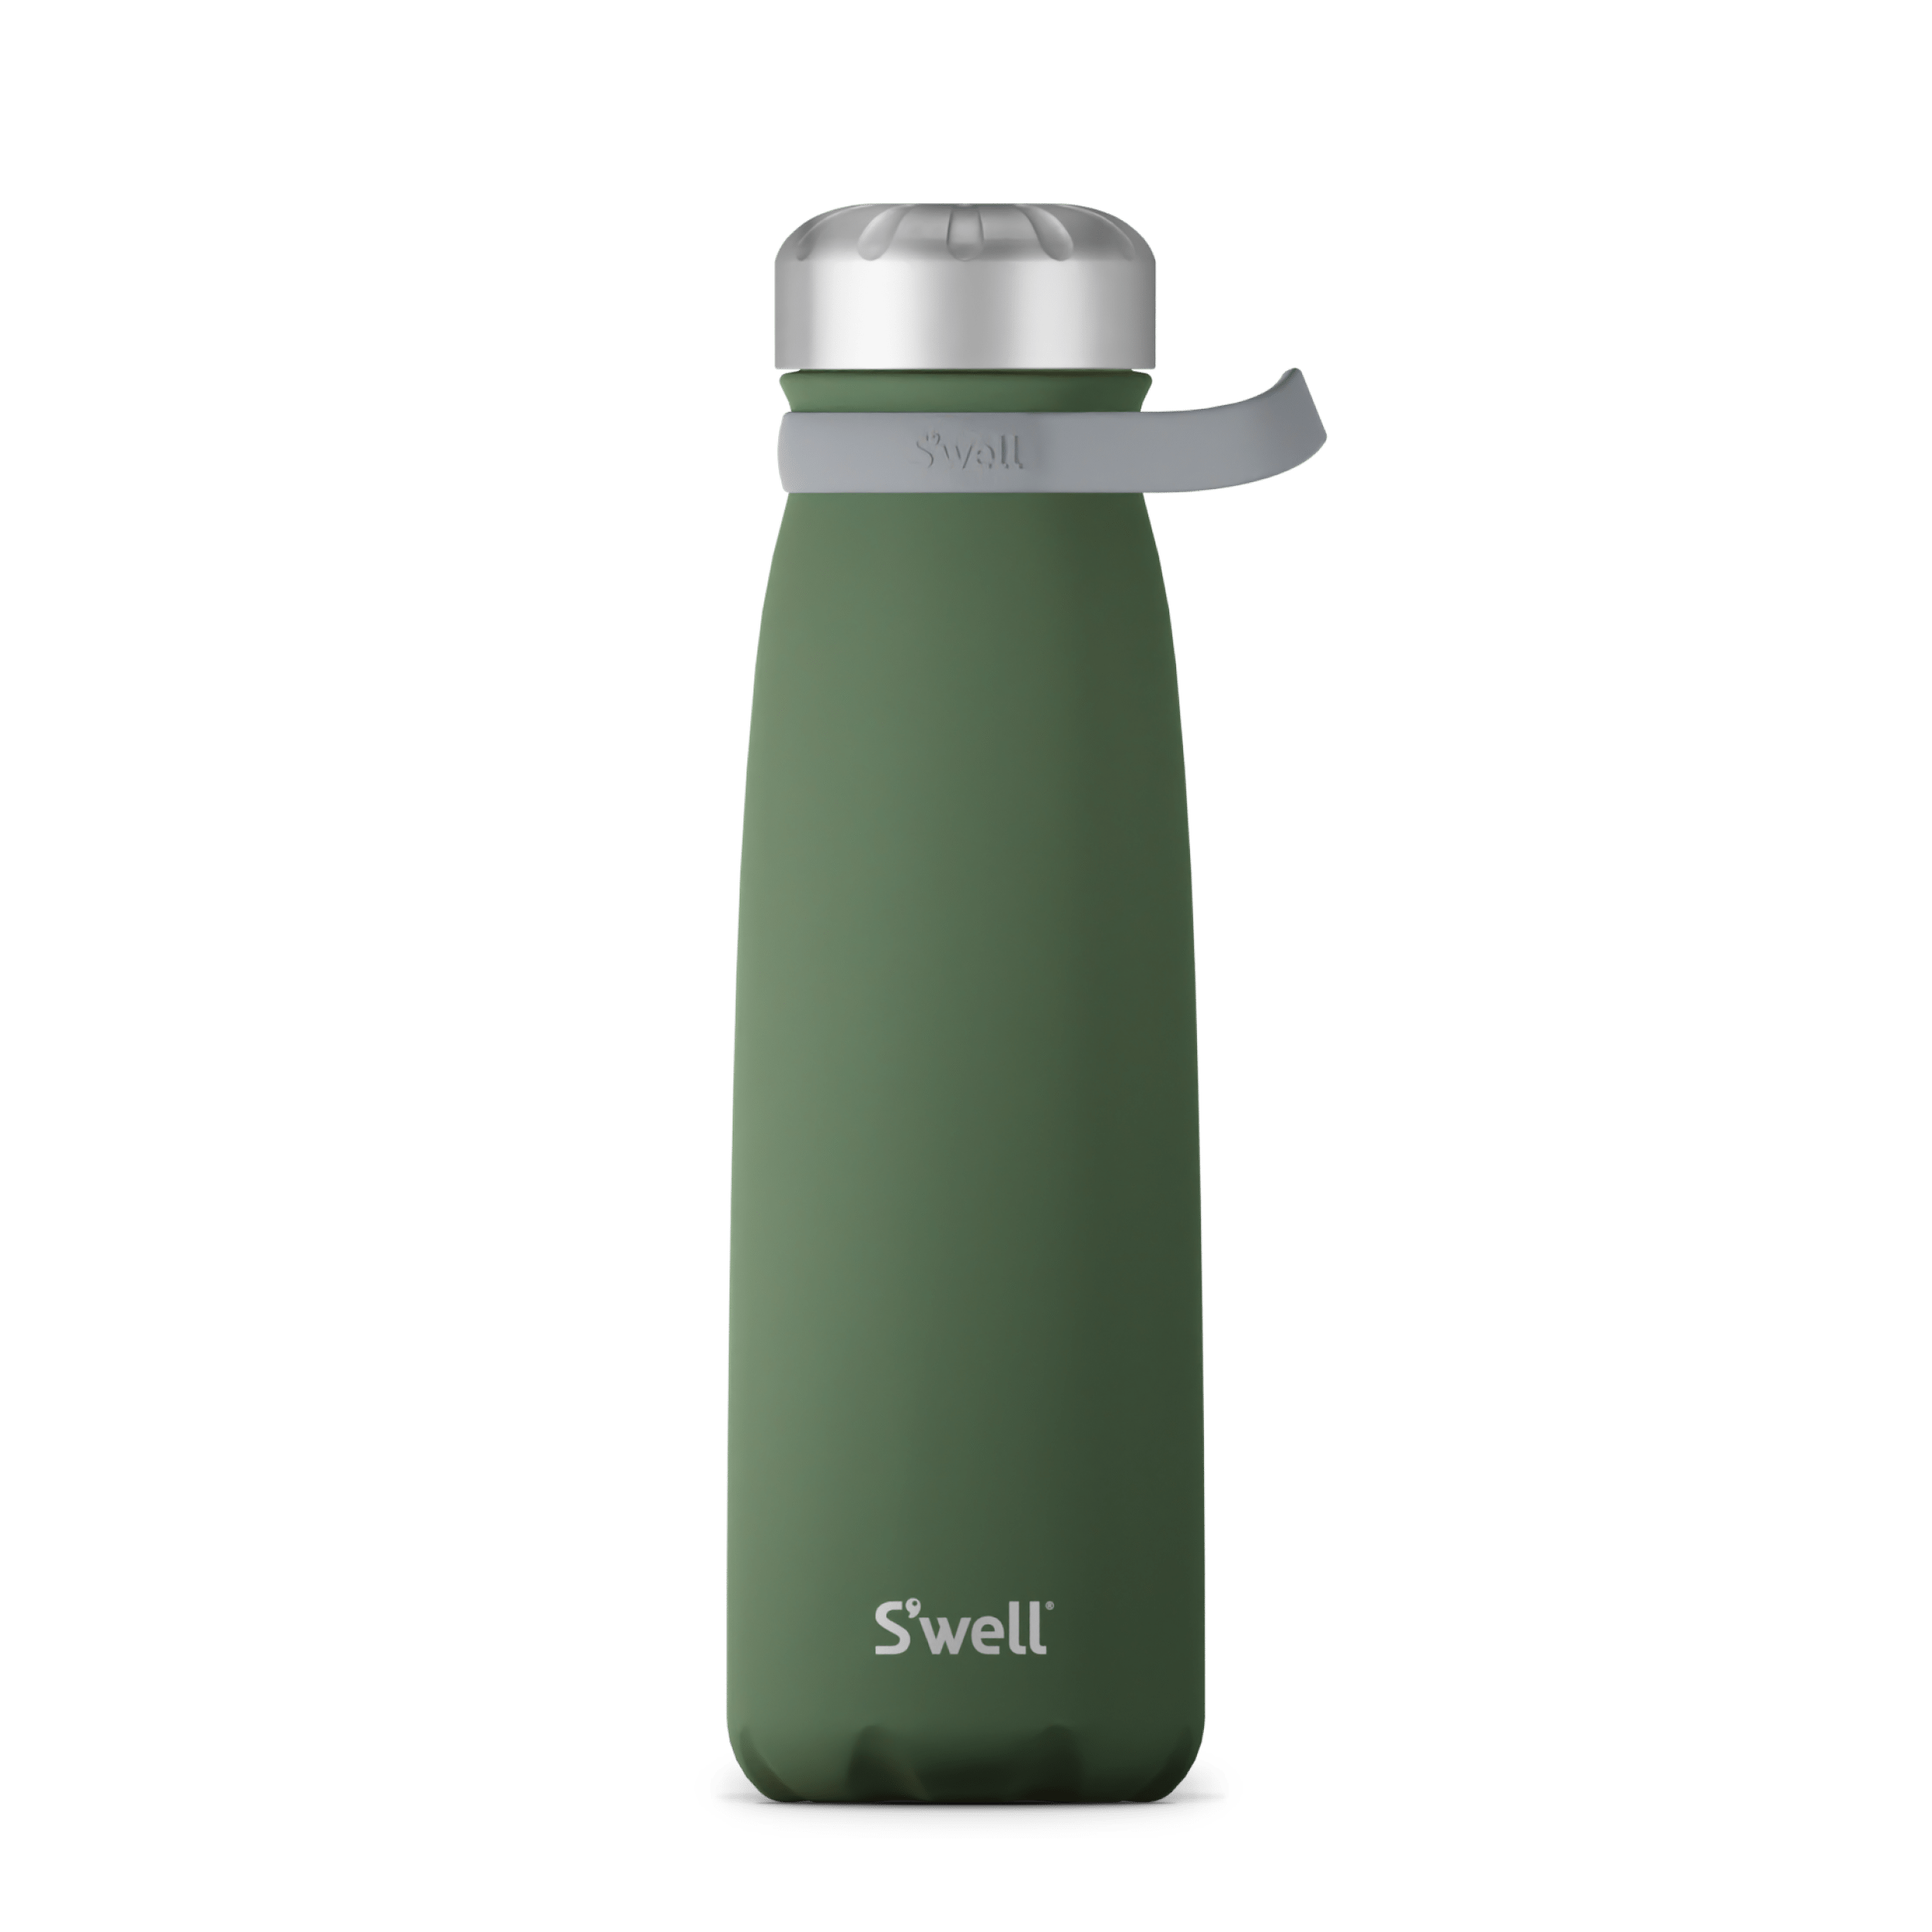 S'well Reusable Water Bottles for Travel